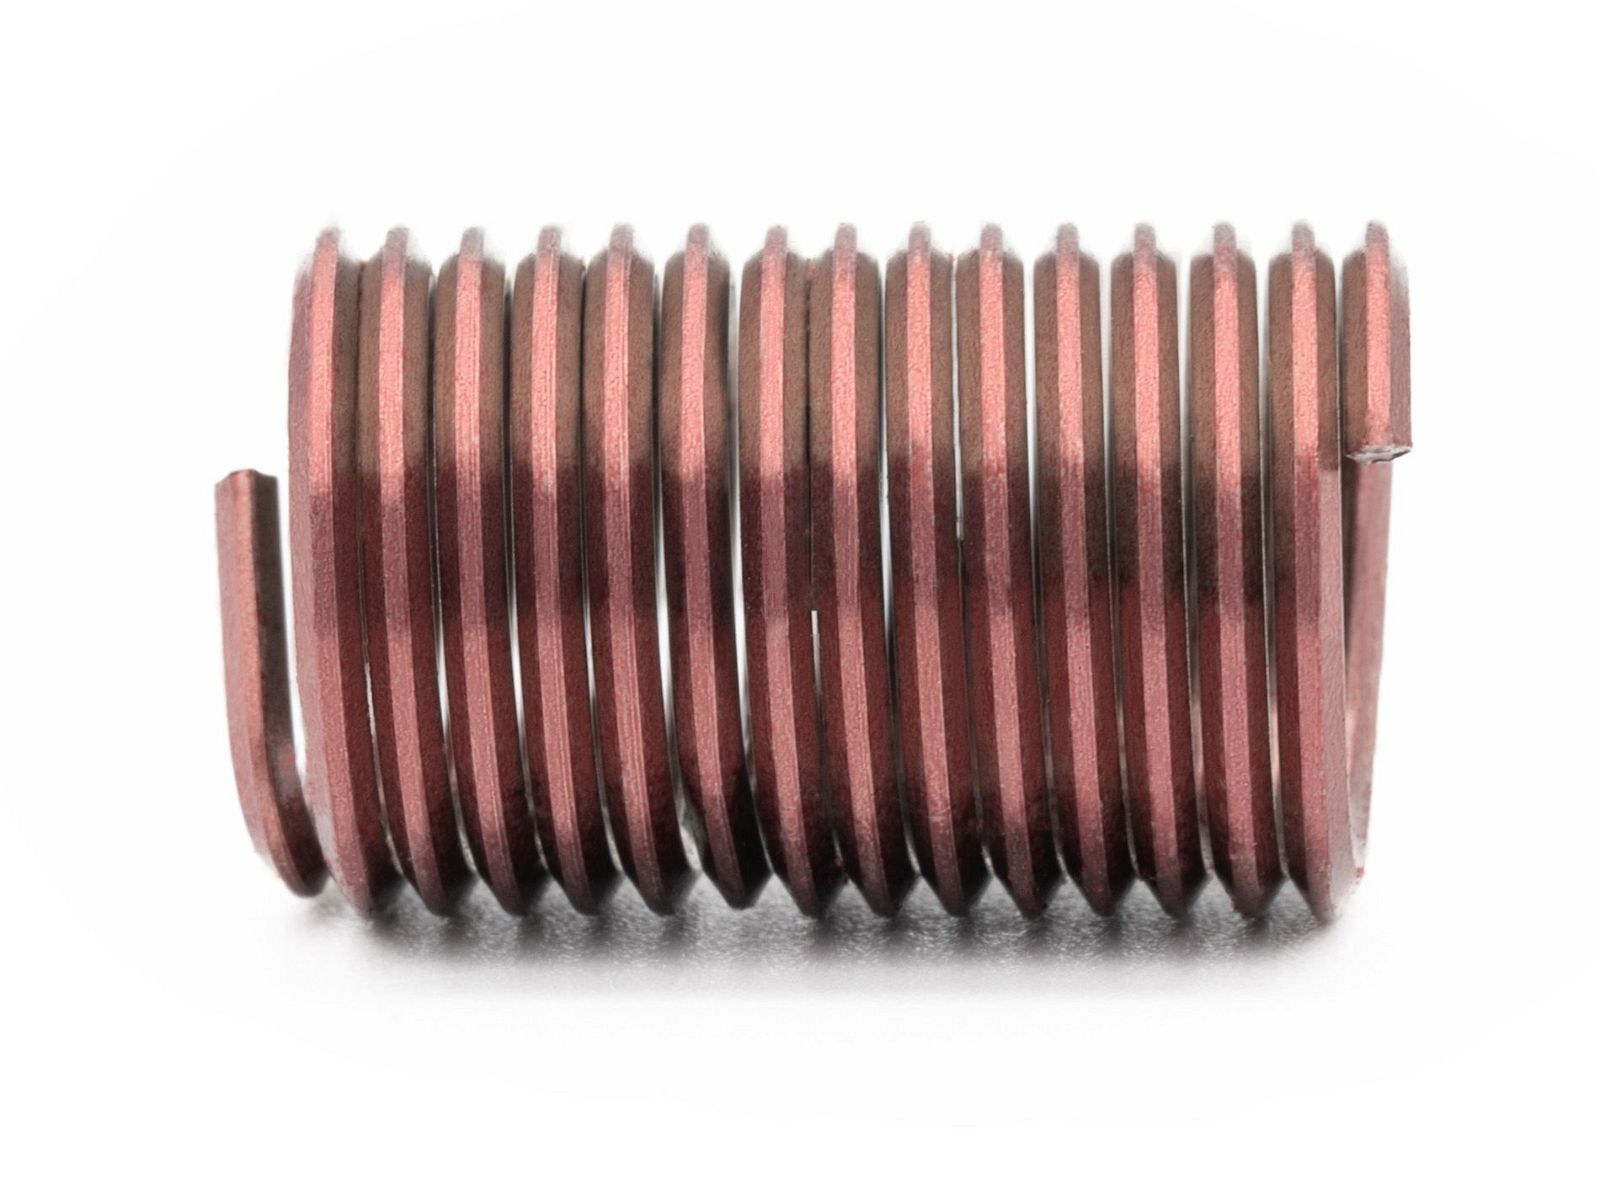 BaerCoil Drahtgewindeeinsätze M 6 x 1,0 - 2,5 D (15 mm) - screw grip (schraubensichernd) - 100 Stk.